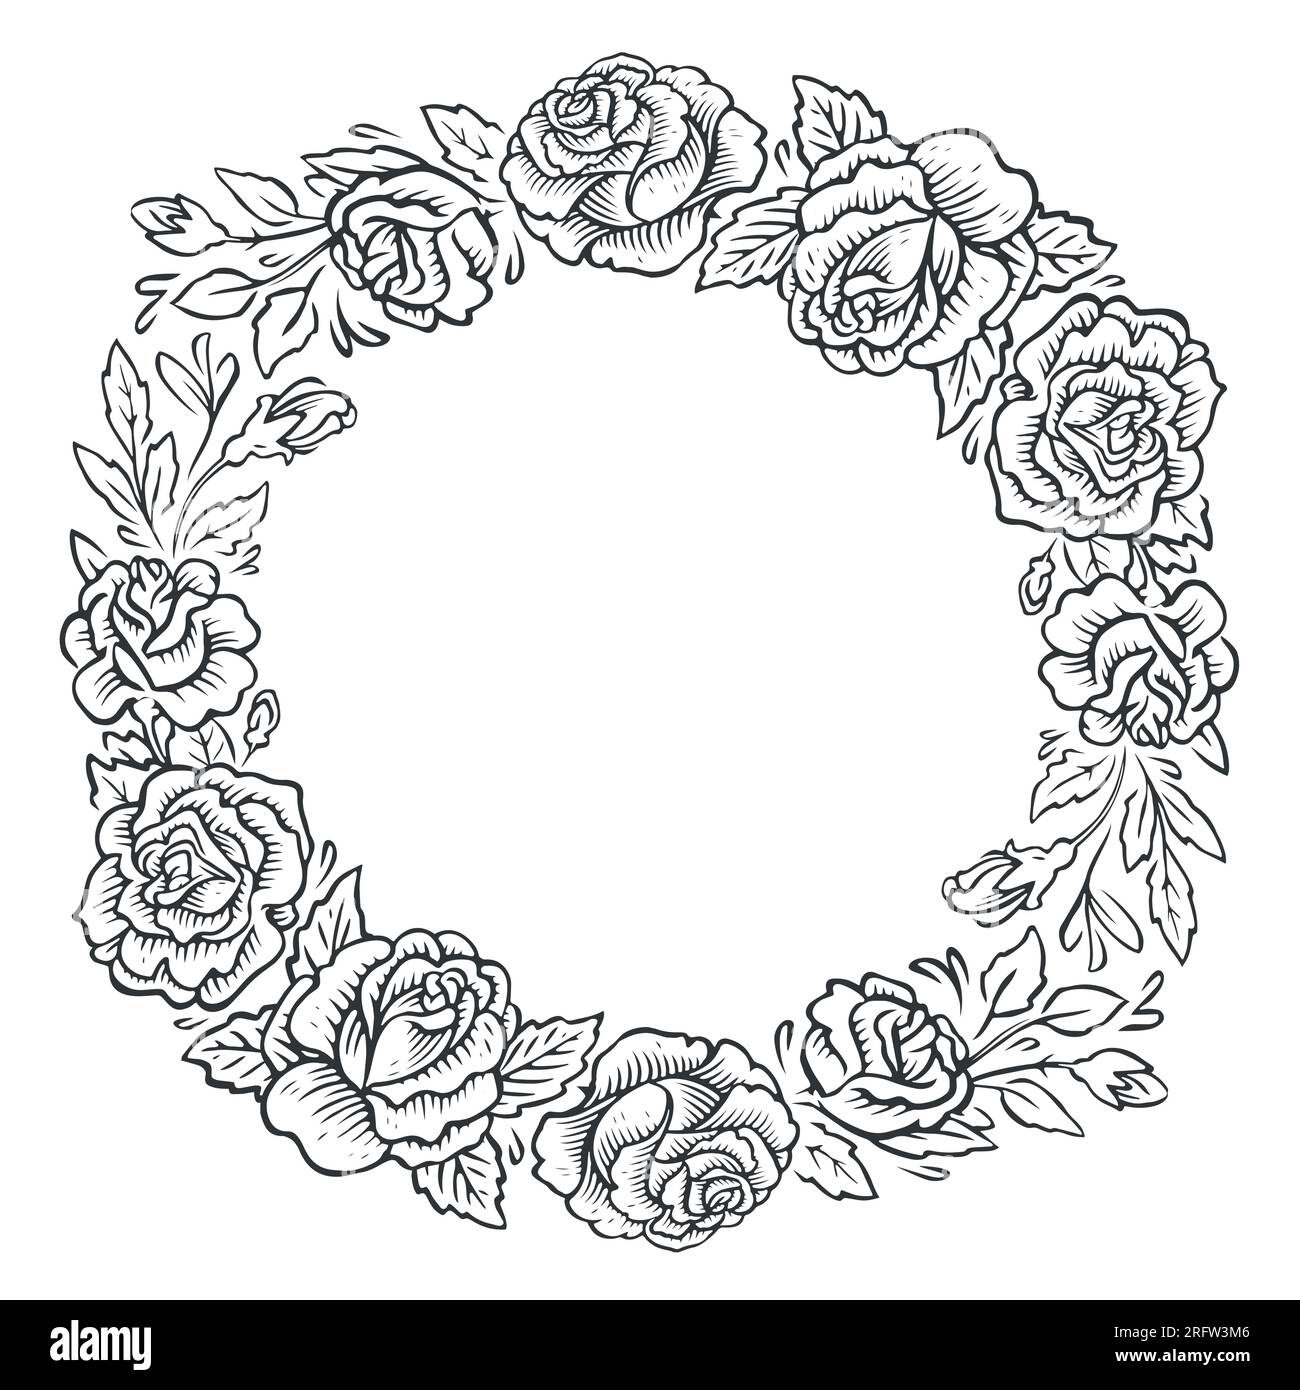 Vector design of roses flowers round invitation frame. Wedding card. Sketch vintage illustration engraving style Stock Vector